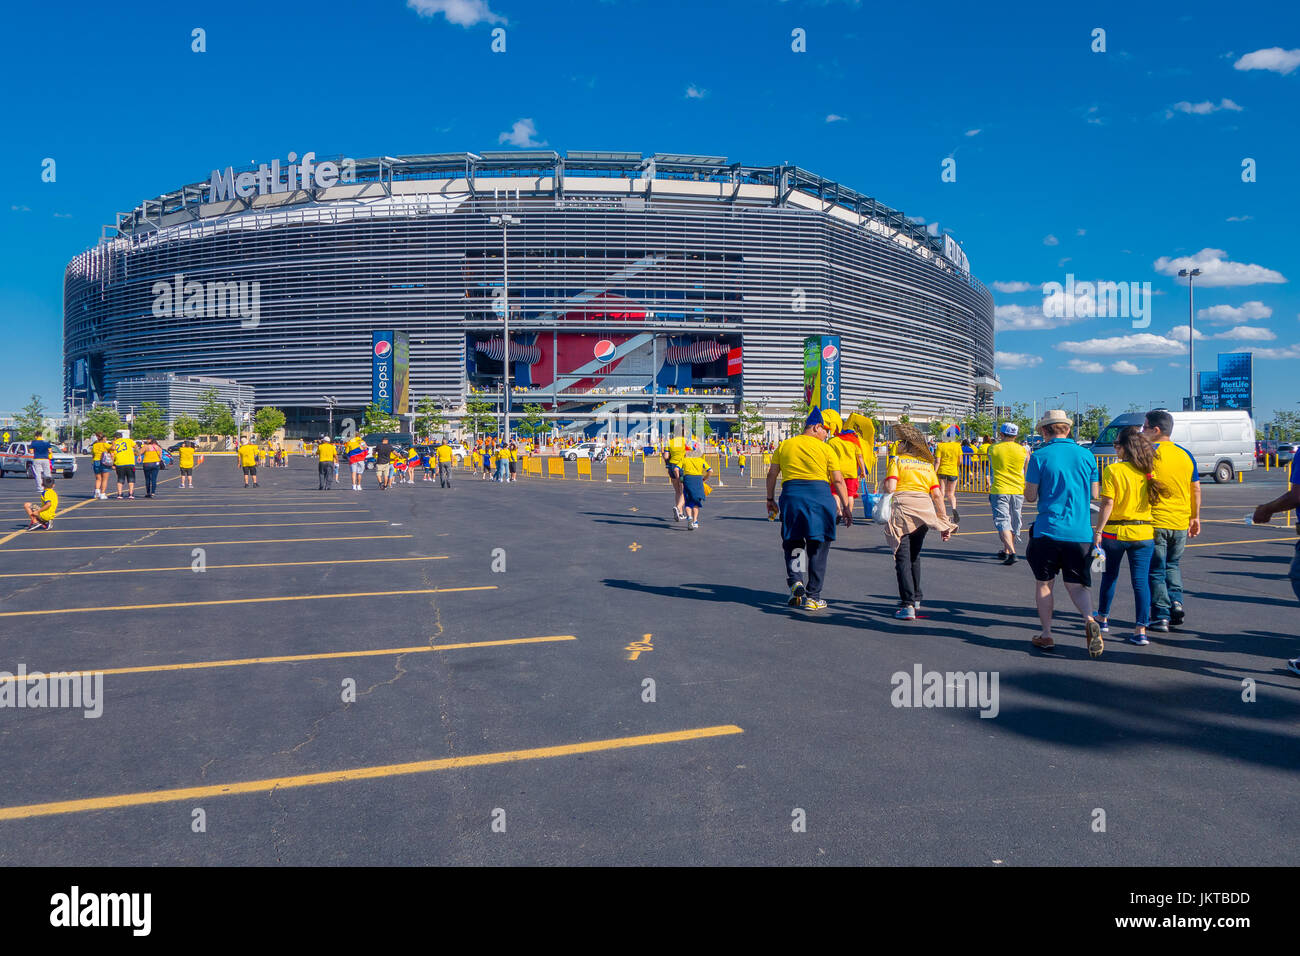 NEW YORK, USA - NOVEMBER 22, 2016: Unidentified ecuadorian fans walking to enter to Metlife Stadium to see the football game in New York Usa Stock Photo